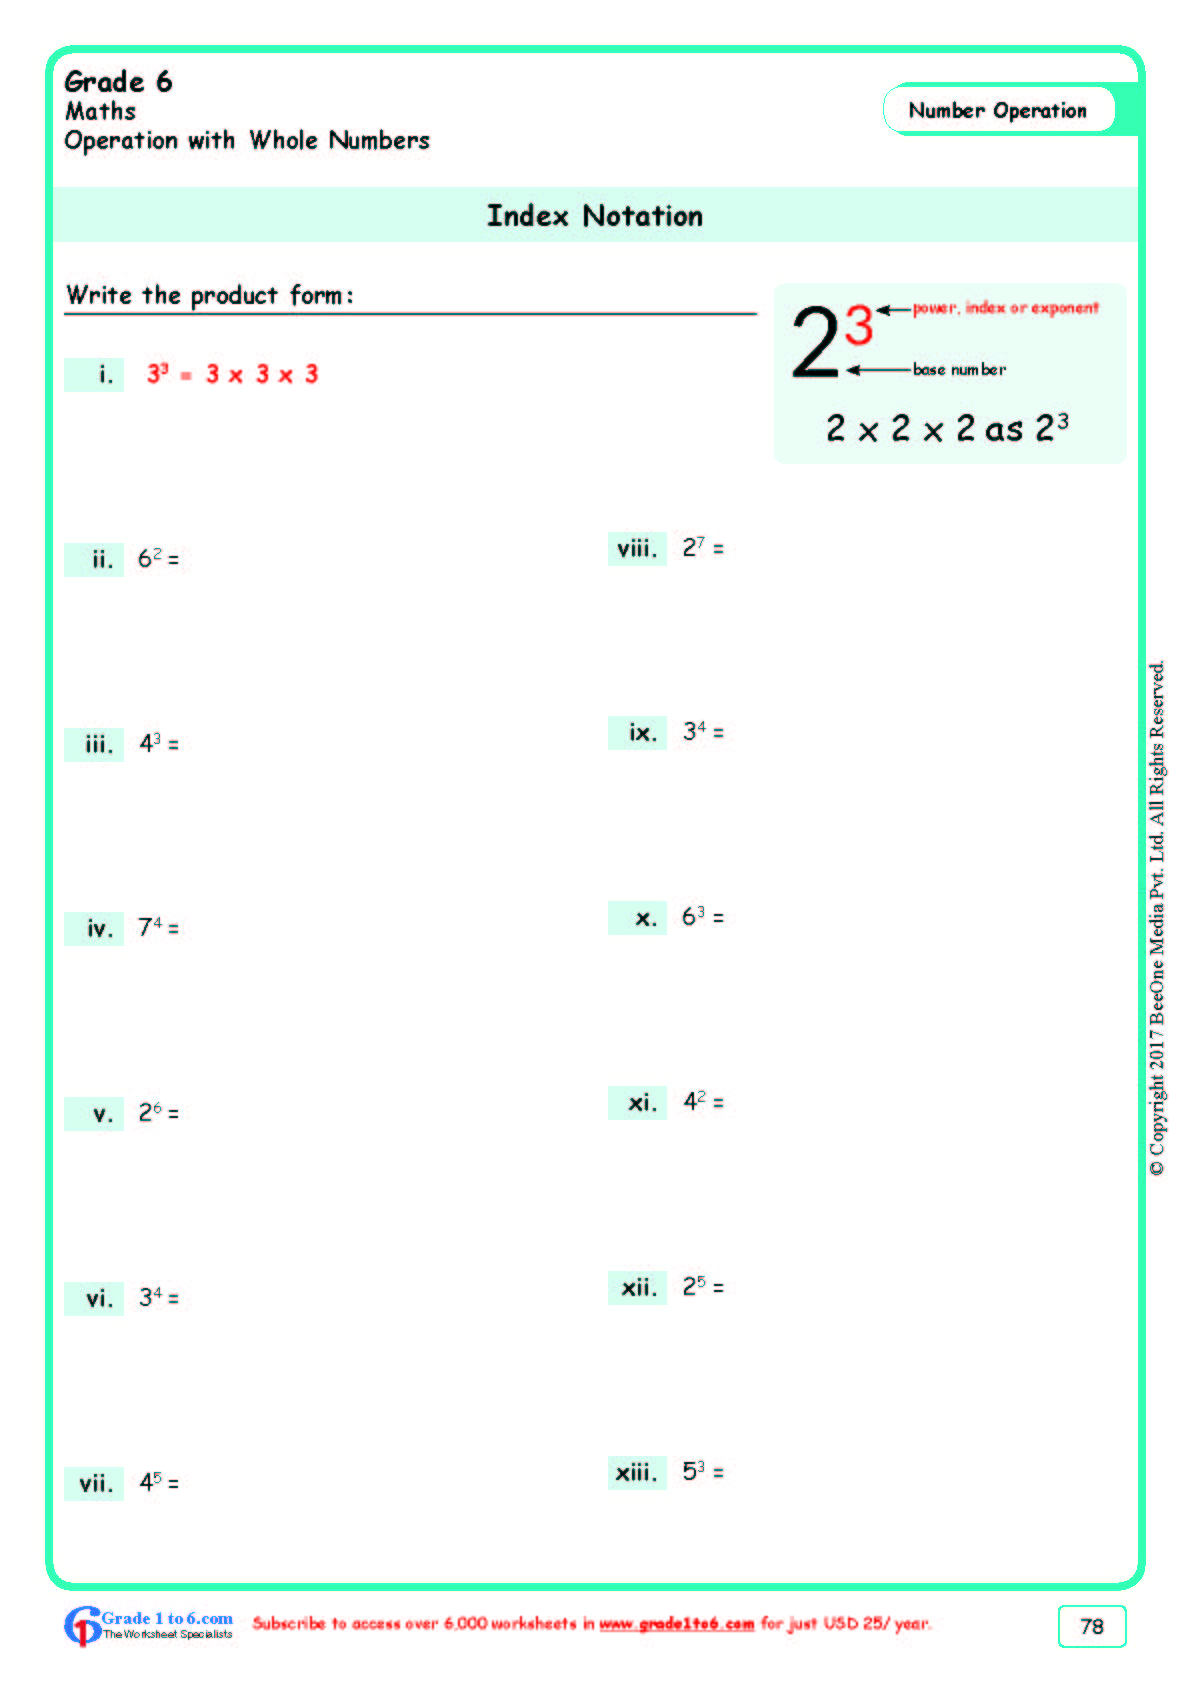 Index & Notation Worksheets|www.grade1to6.com